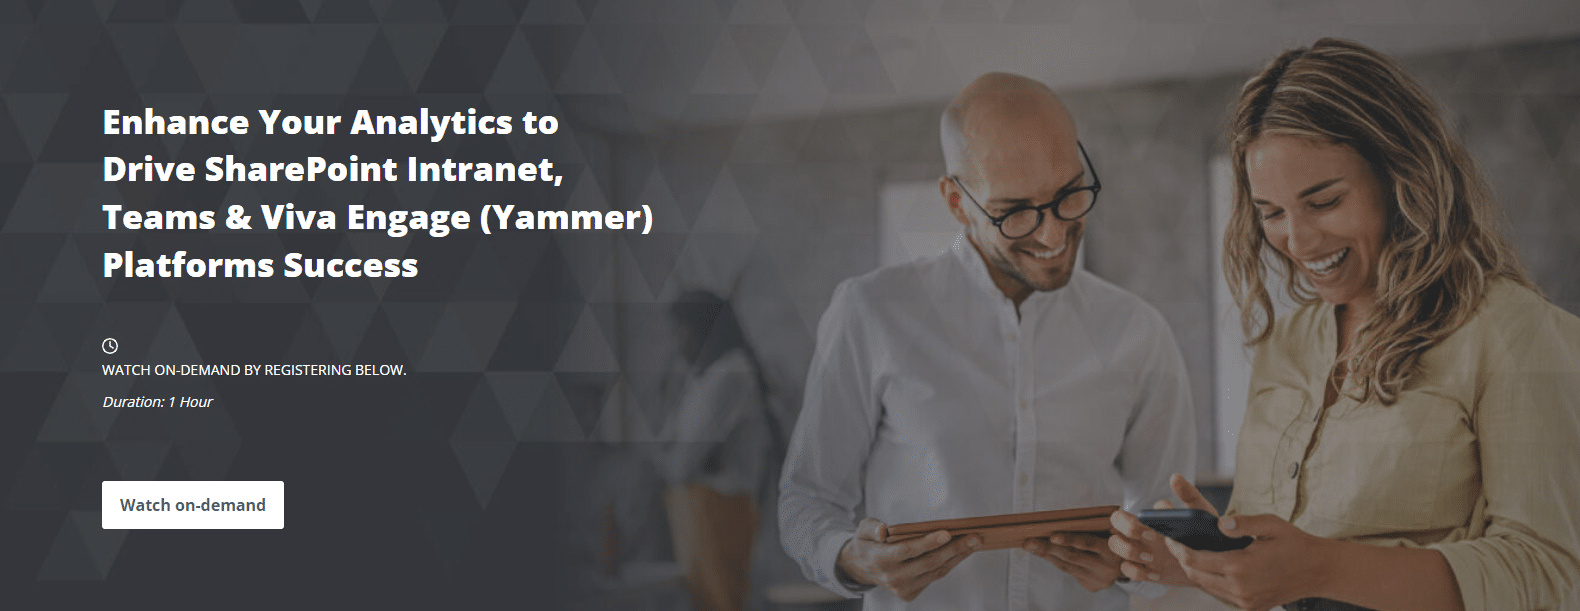 AvePoint Webinar - Enhance Analytics - SharePoint, Intranet, Viva Engage Yammer Platform Success